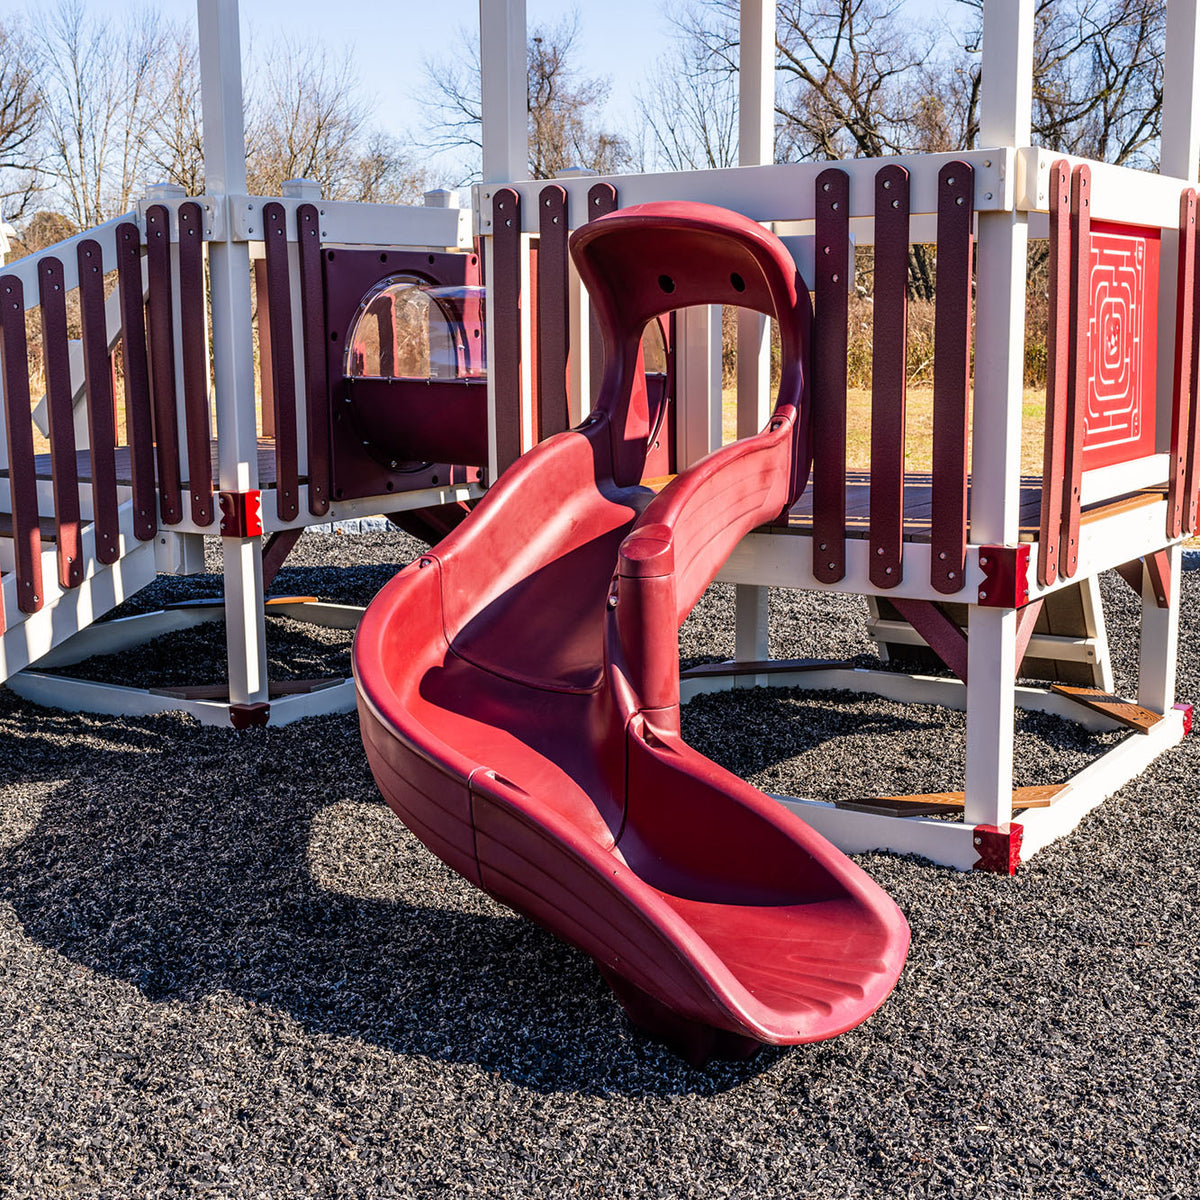 King-Swings-Commercial-Playgrounds-Trail-Blazer-Slide